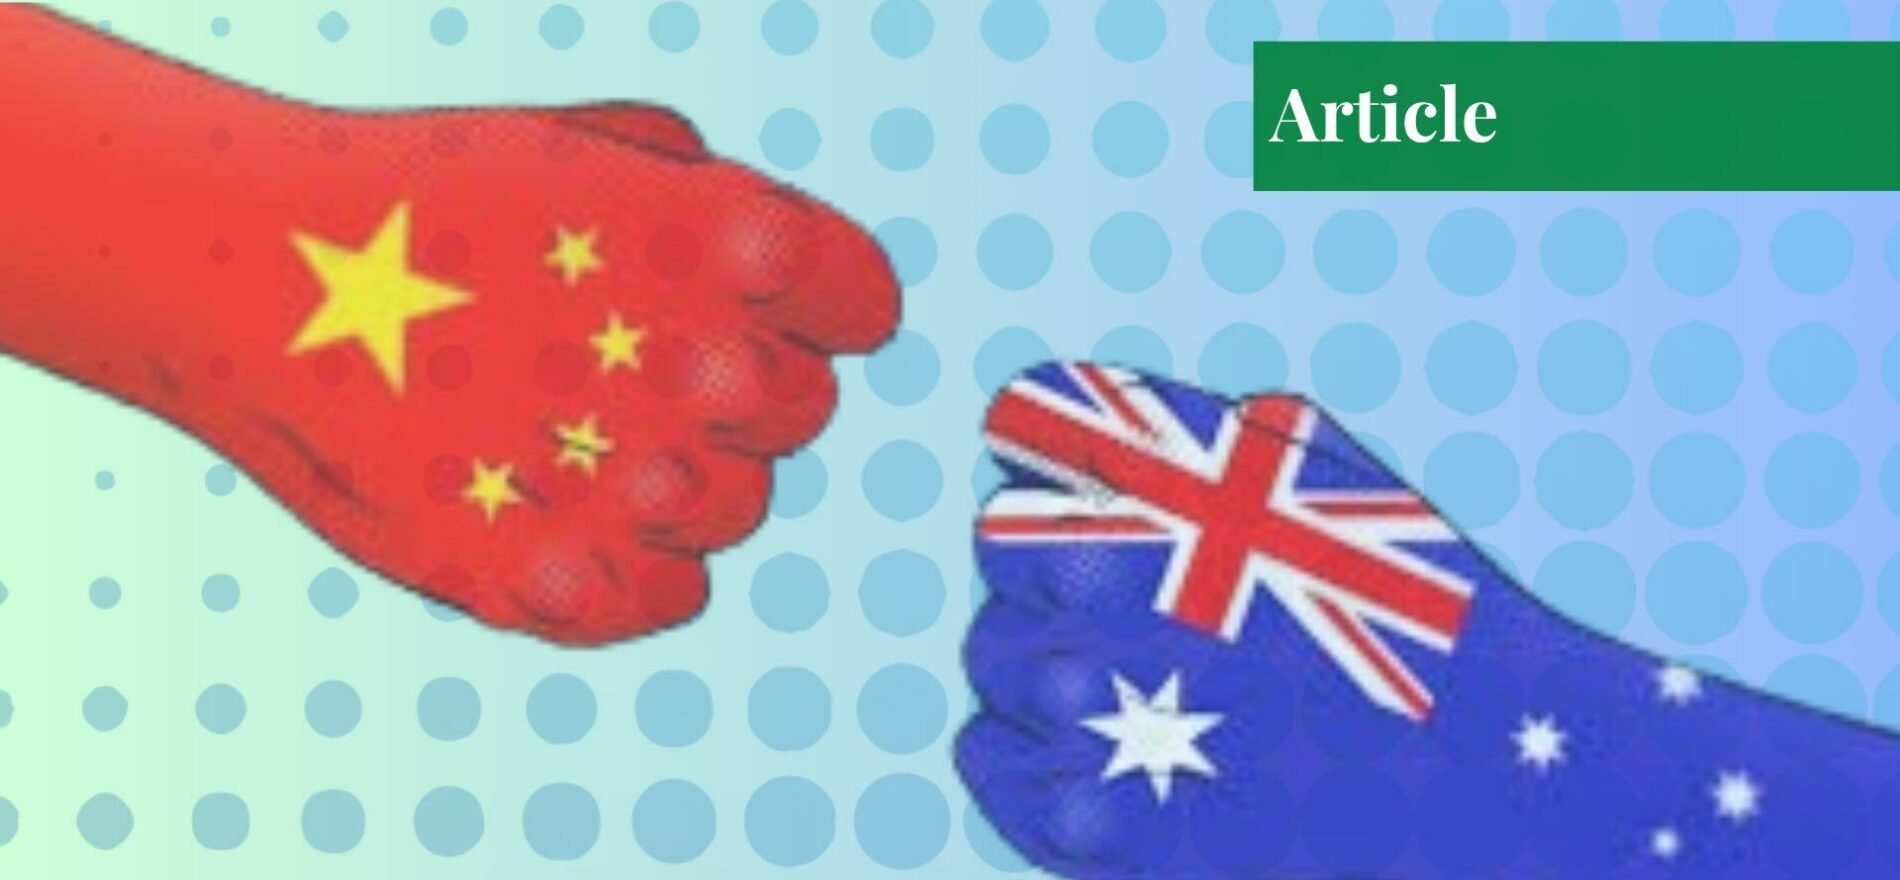 Australia China Relations - Conceptualizing Frenemies?